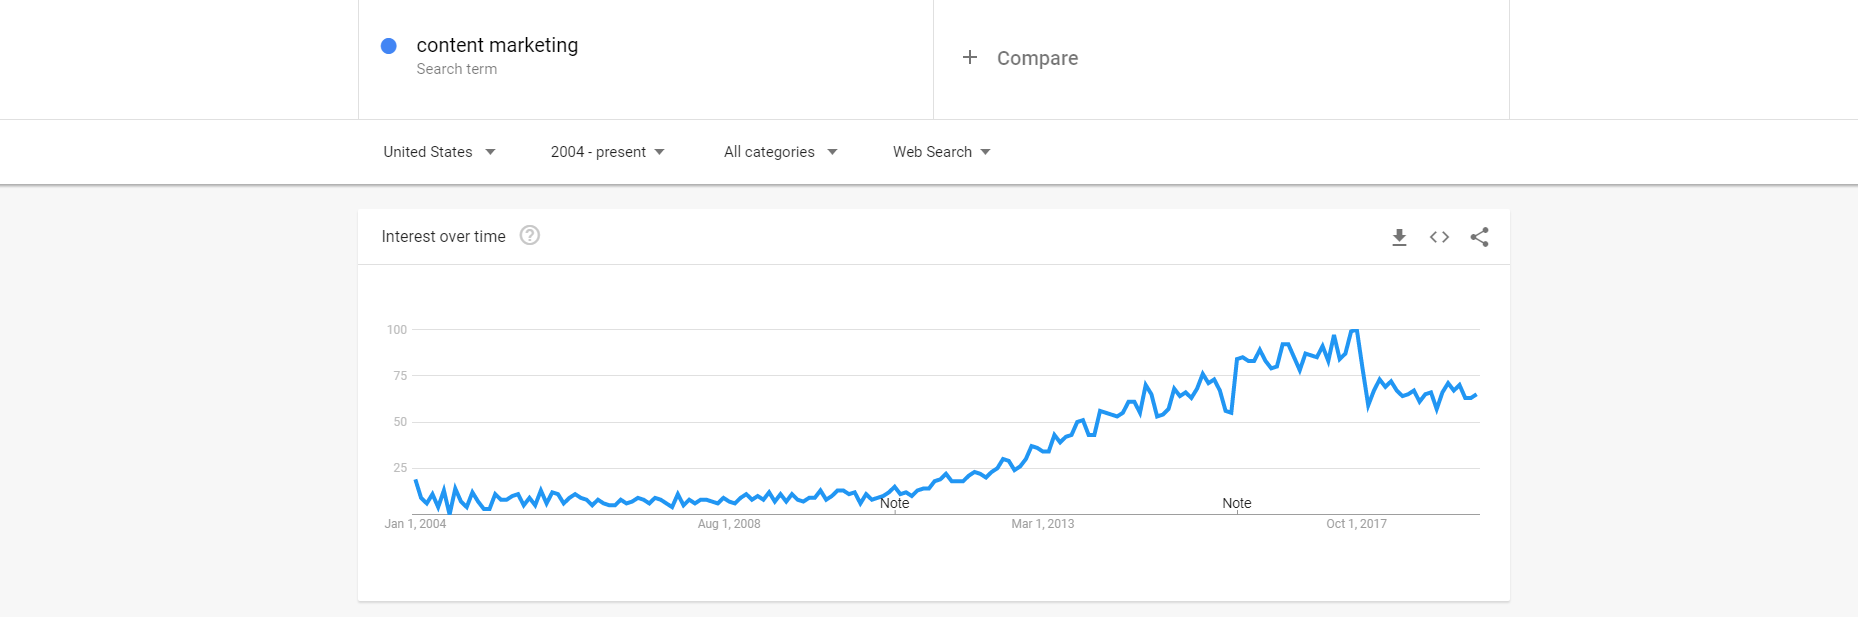 Content marketing Google Trends